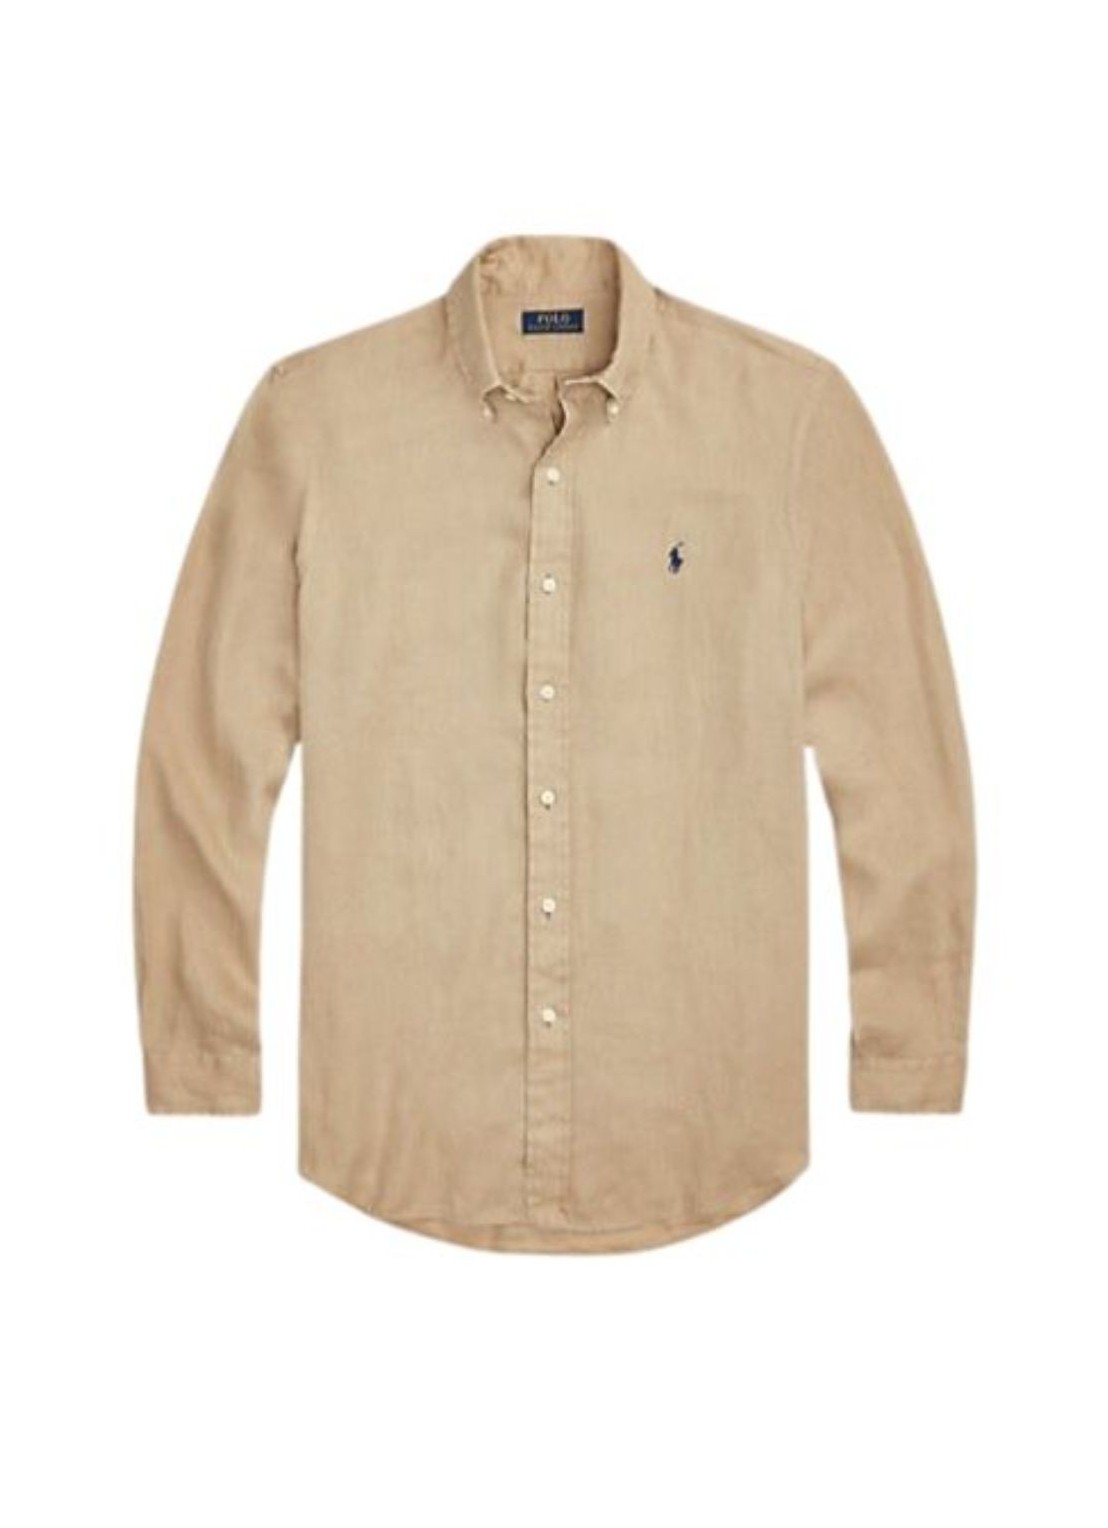 Camiseria polo ralph lauren shirt man cubdppcs-long sleeve-sport shirt 710794141011 vintage khaki ta